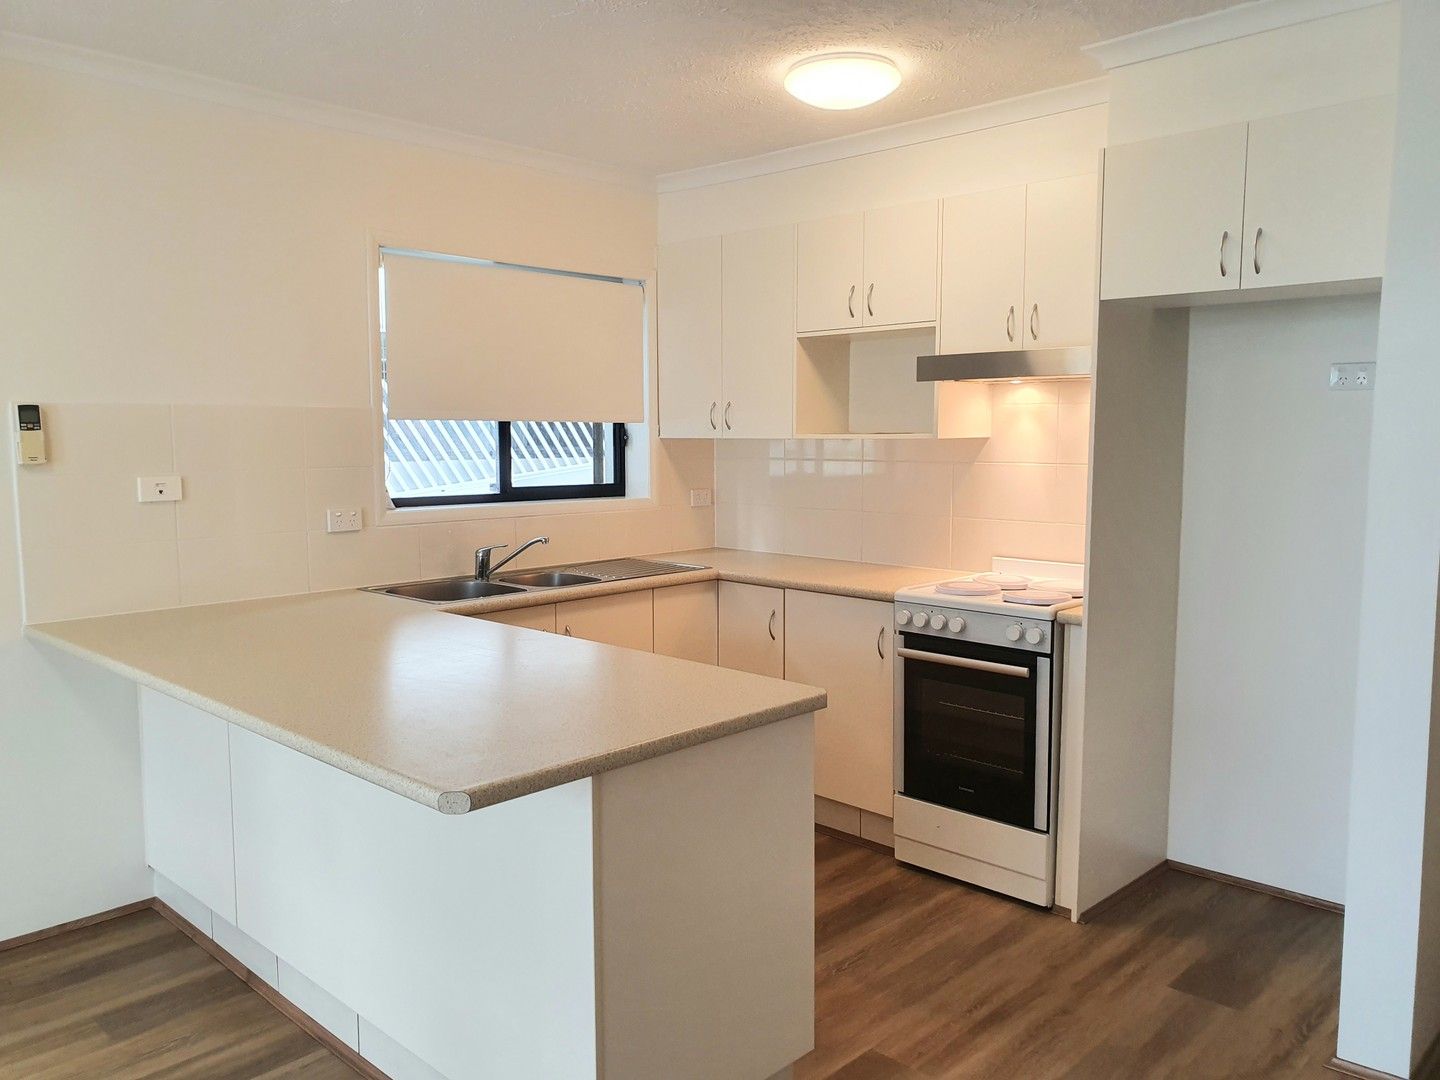 2 bedrooms Apartment / Unit / Flat in 12/12-14 Musgrave Street COOLANGATTA QLD, 4225